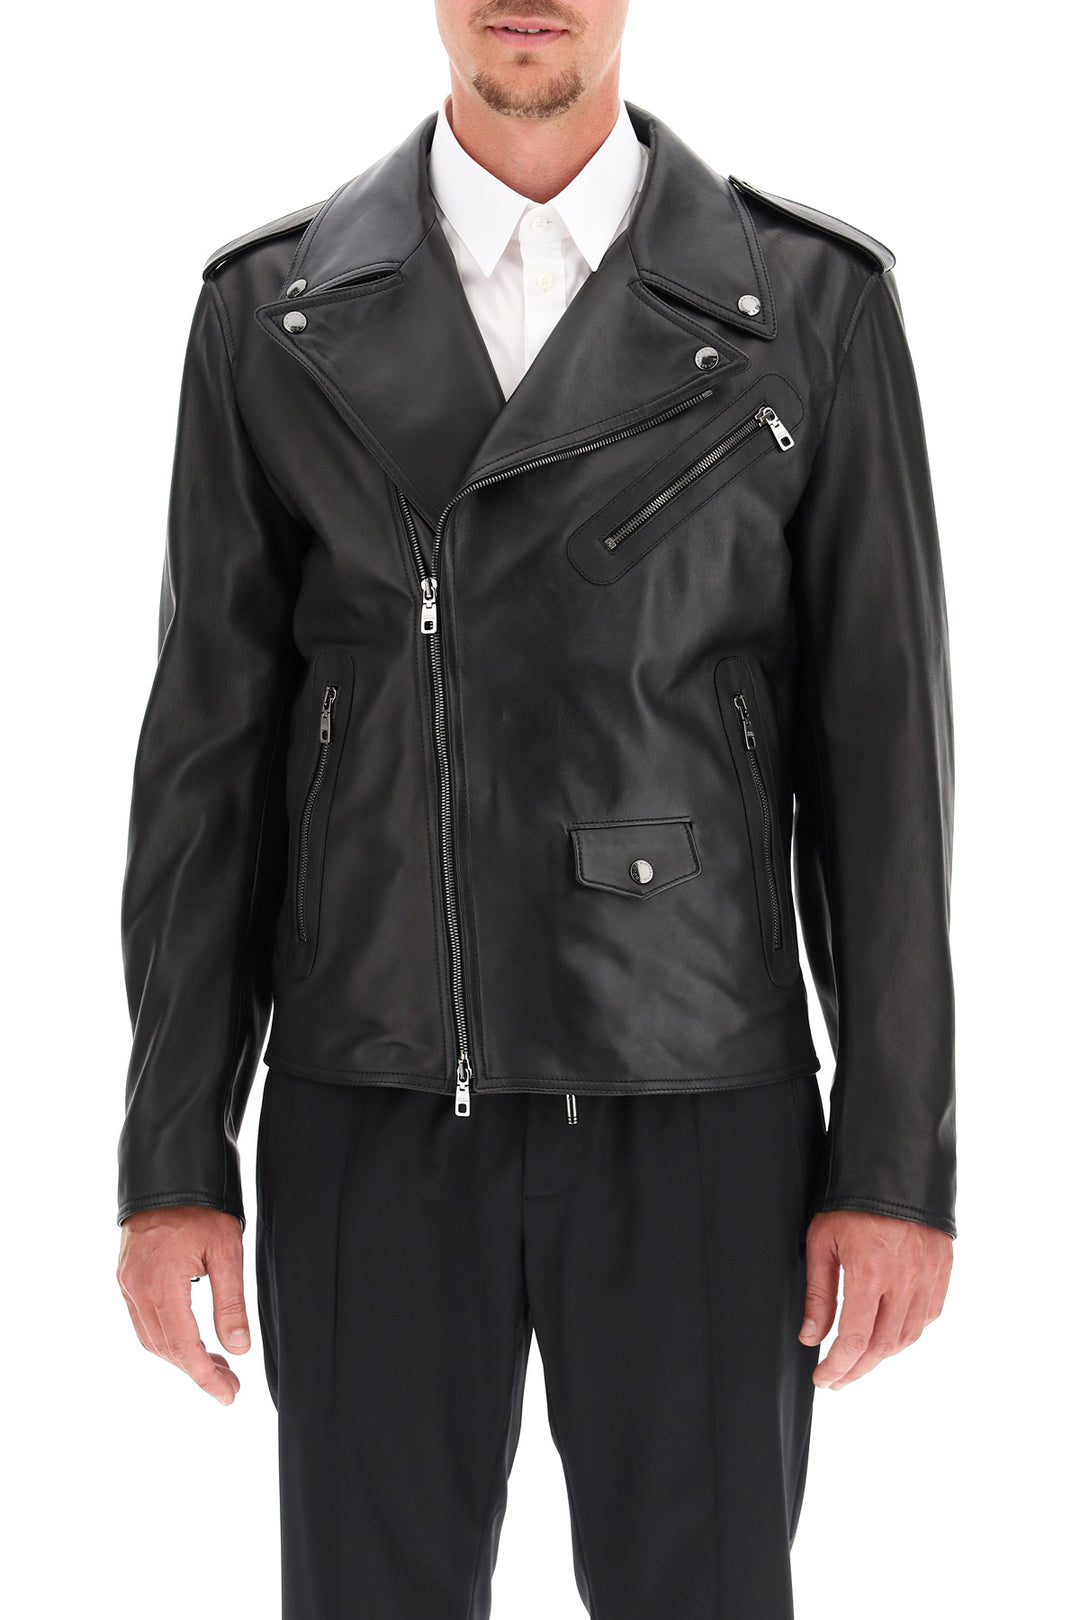 Dolce & Gabbana Leather Jacket   Black